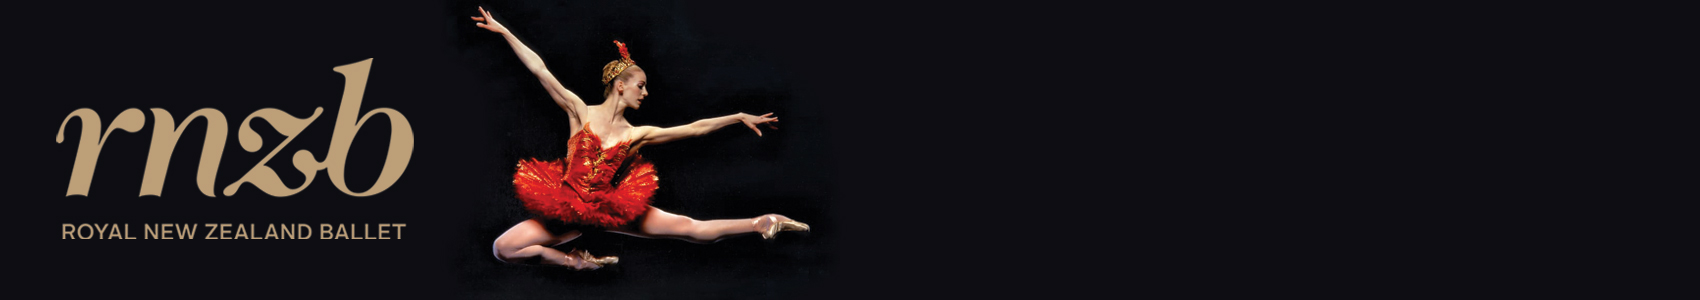 Meet The Makers: Royal New Zealand Ballet